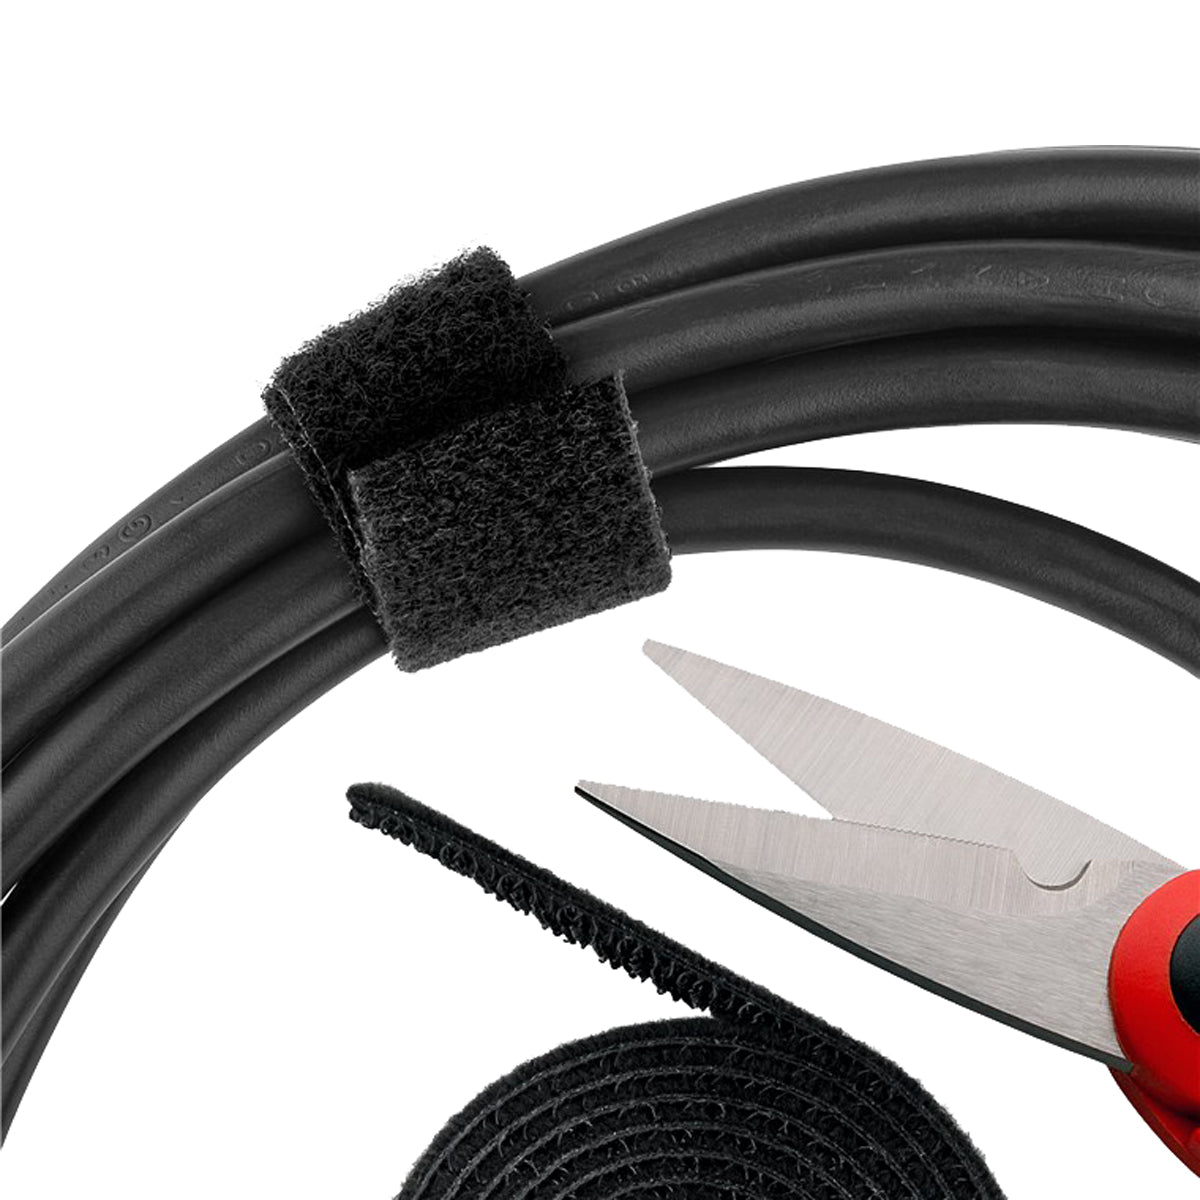 Goobay Cable Management Hook & Loop - Black.